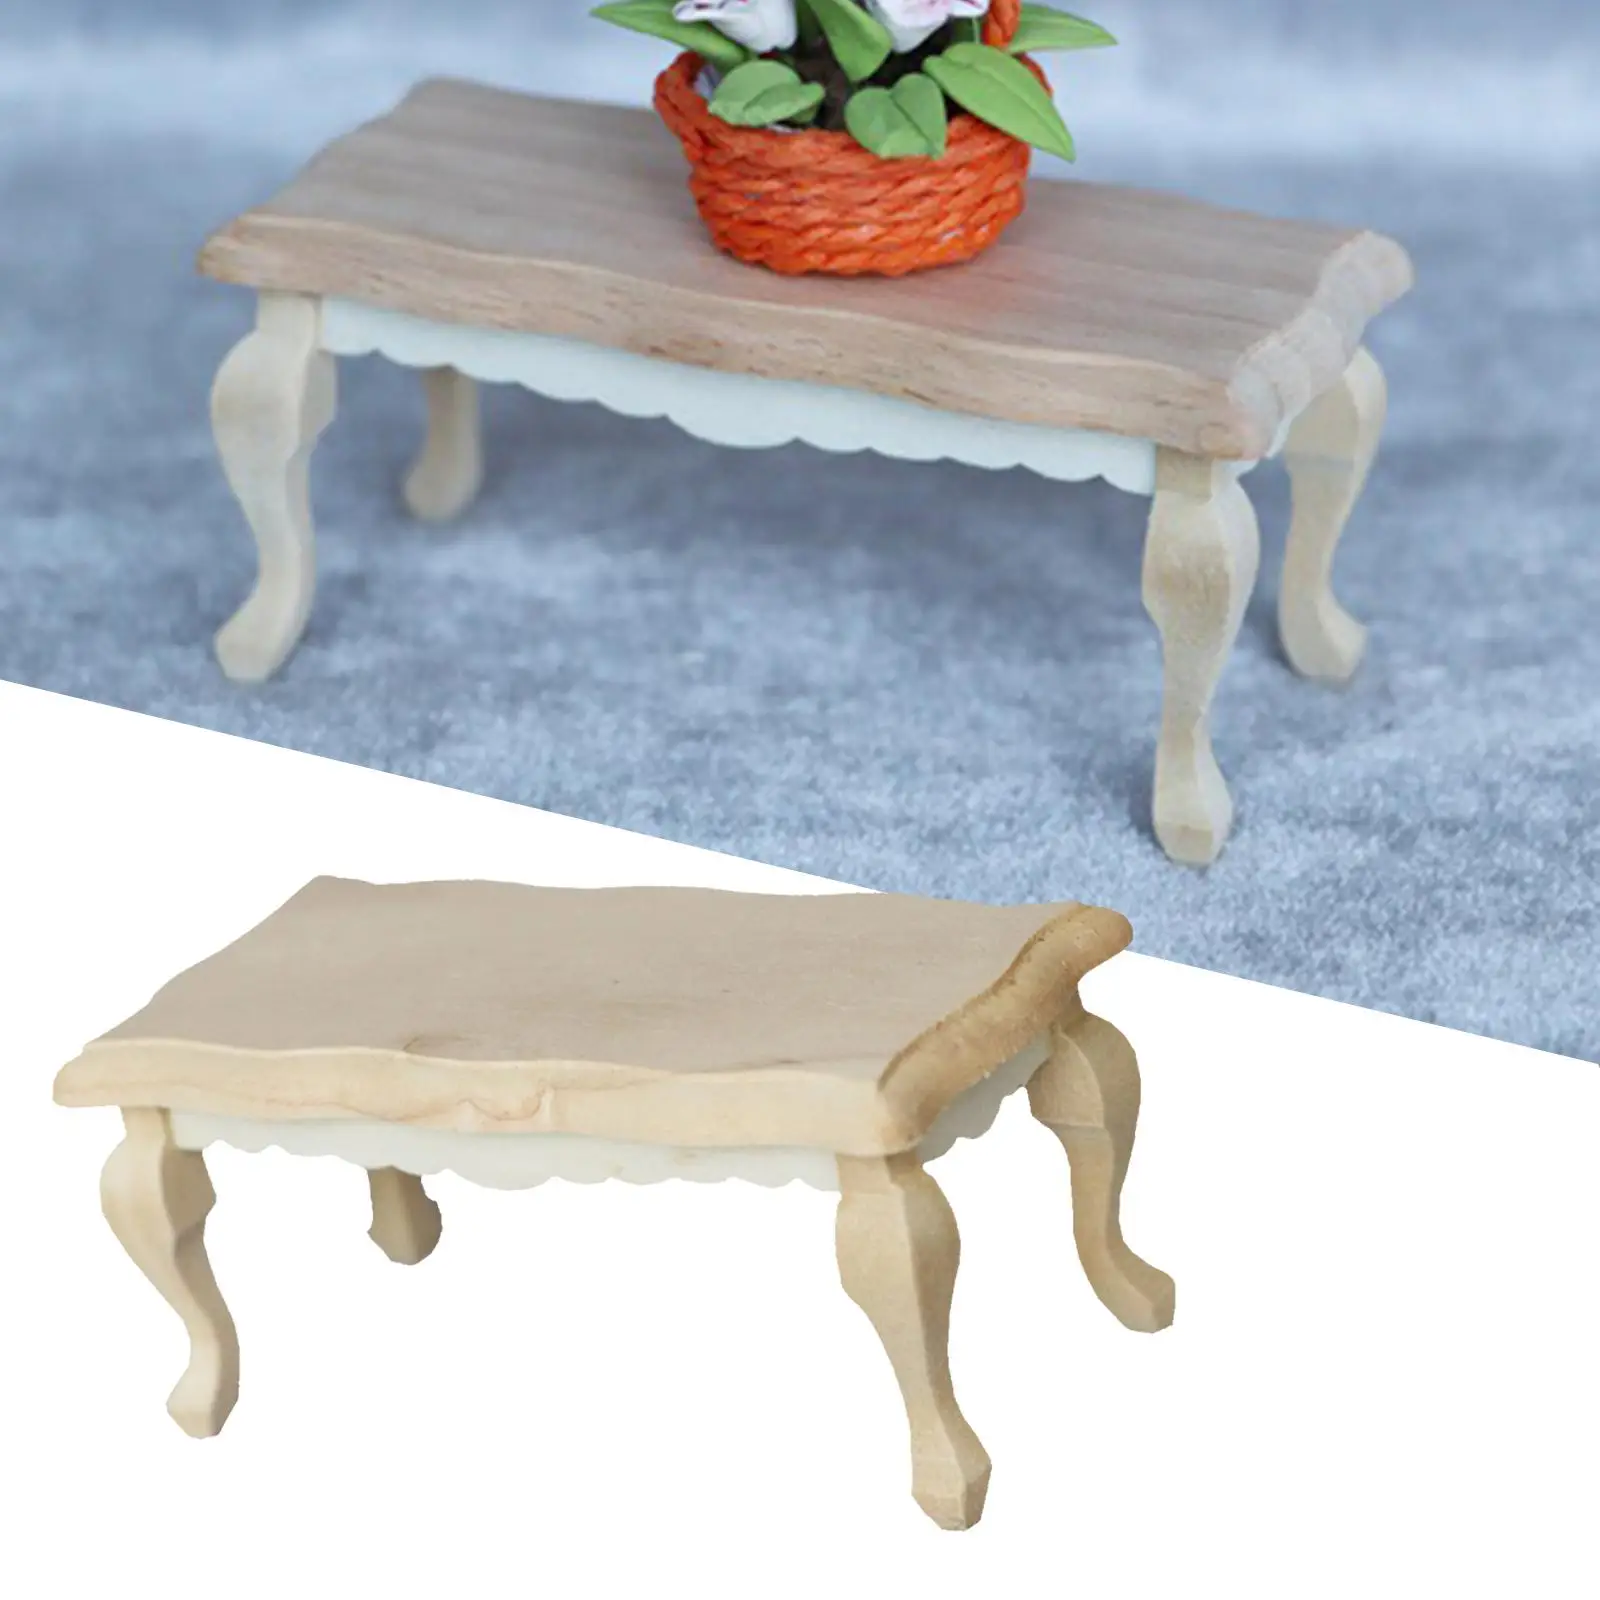 1/12 Dollhouse Table Mini Coffee Table Doll House Decor Wood for Children